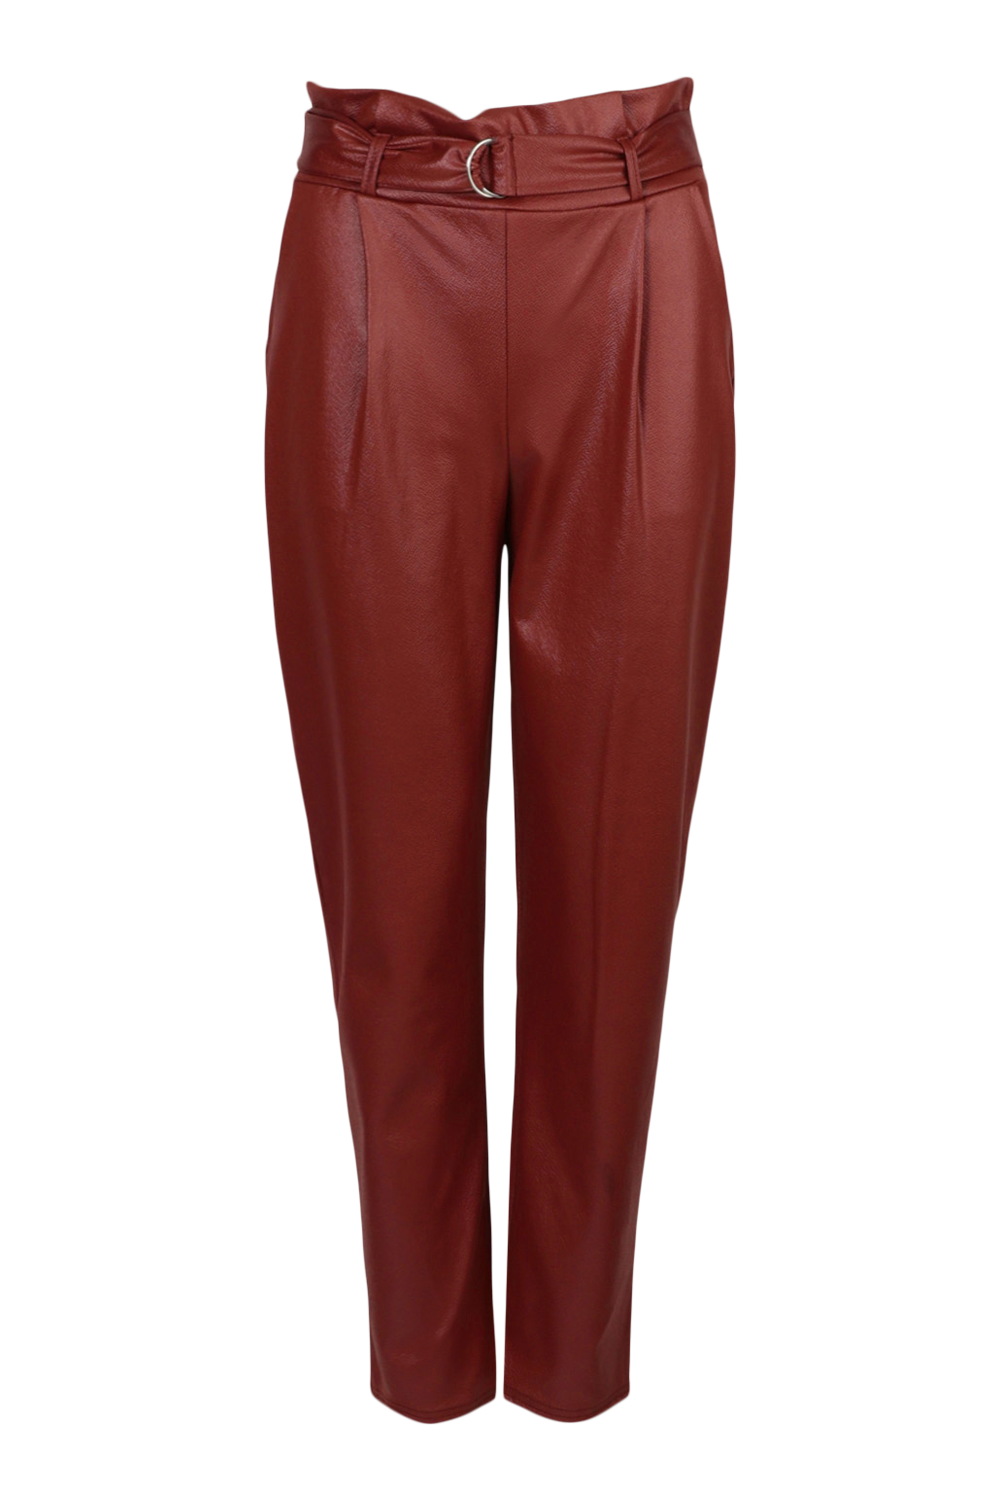 Scarlet Pants - Chocolate